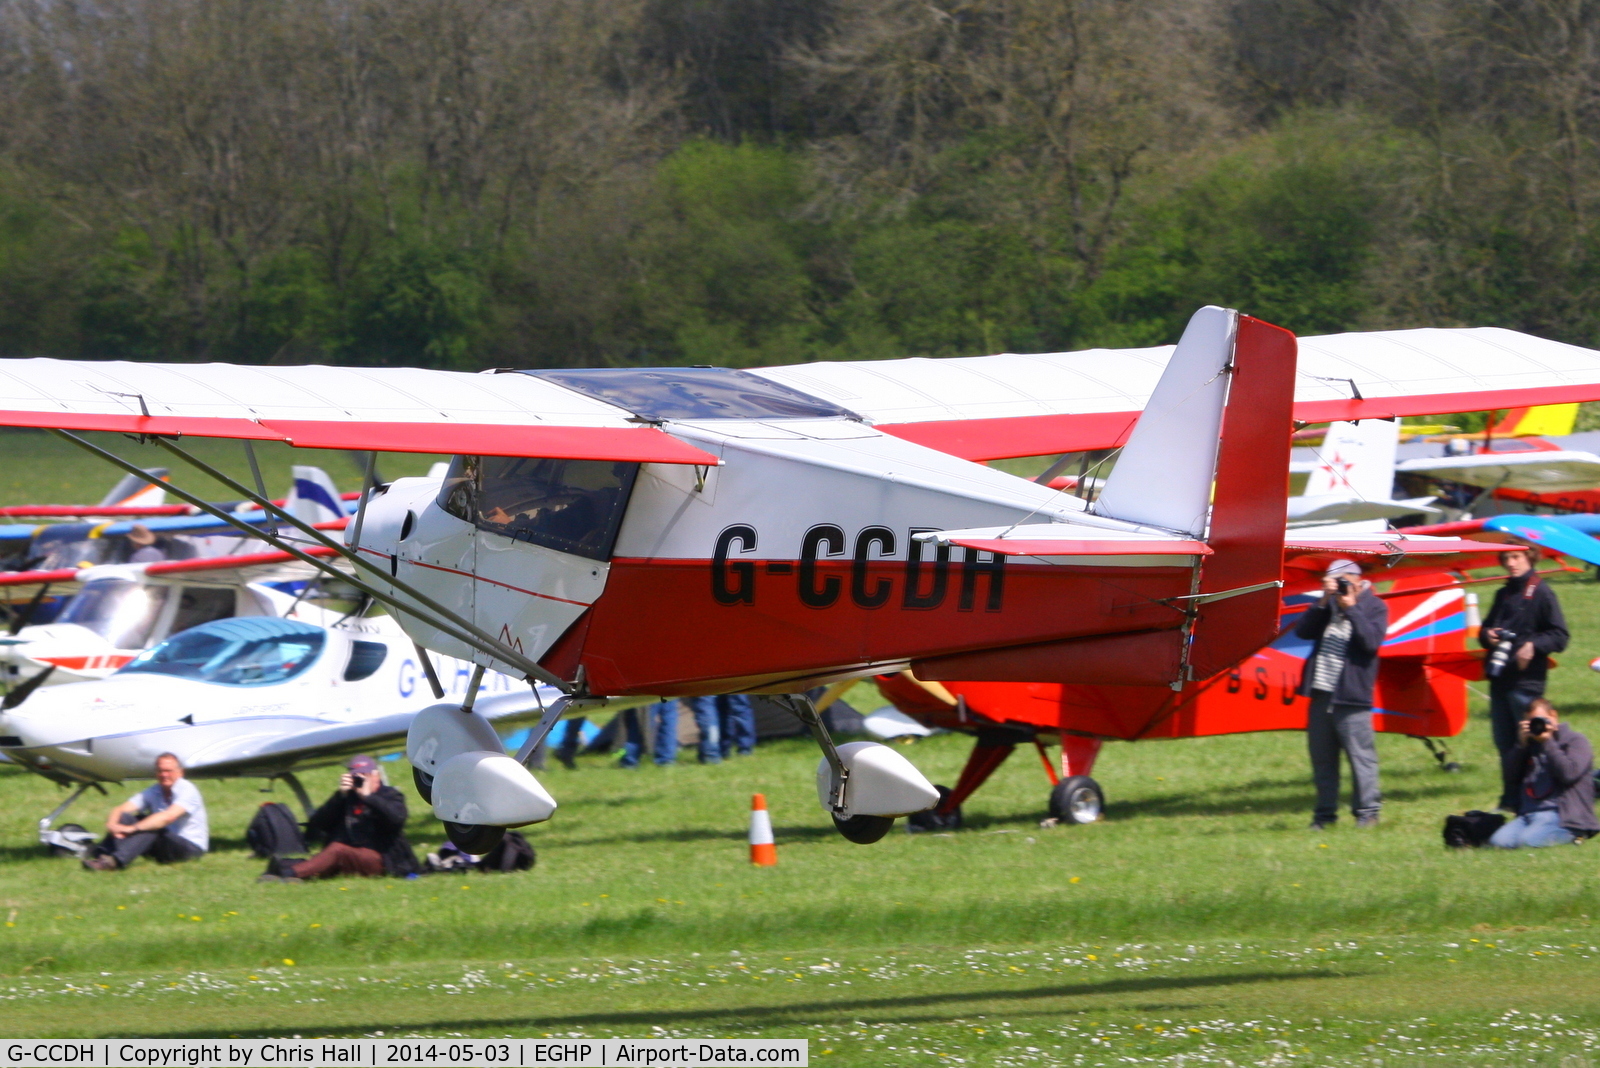 G-CCDH, 2003 Hepworth Skyranger 912(2) C/N BMAA/HB/233, at the 2014 Microlight Trade Fair, Popham